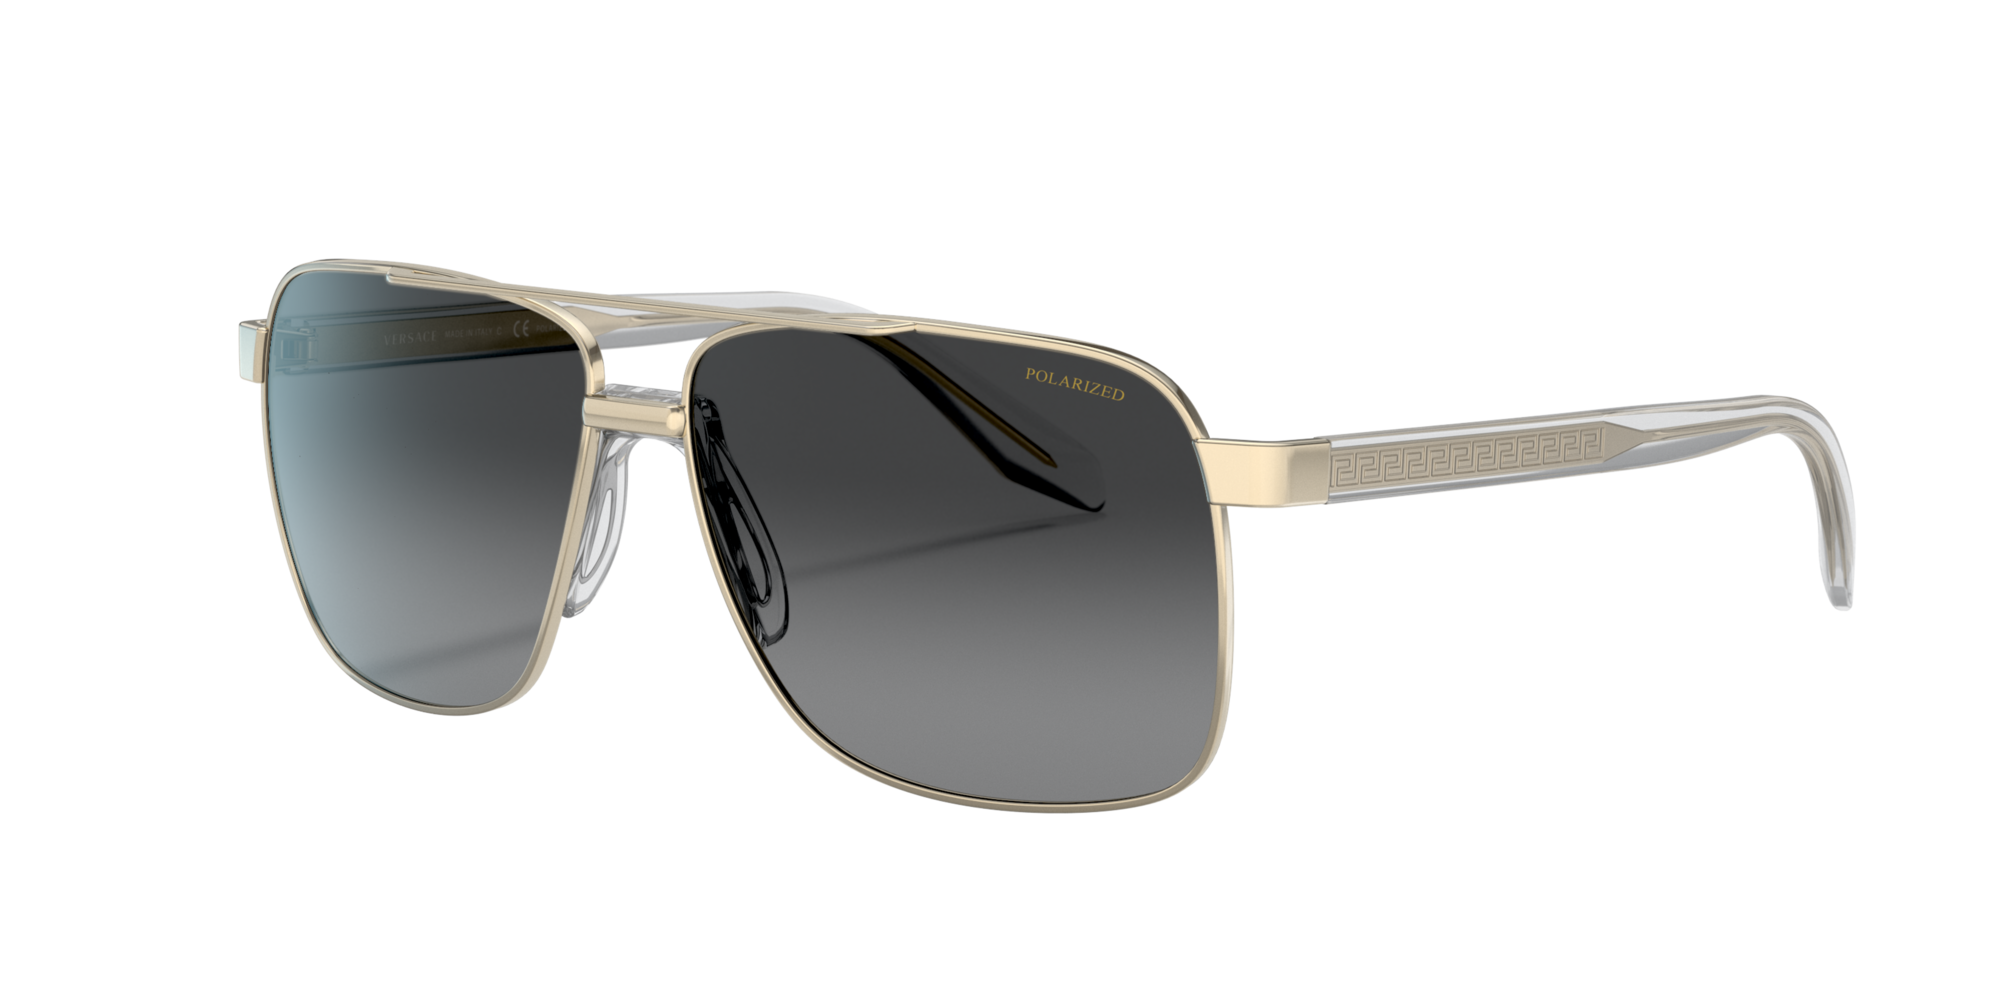 versace glasses model 2174